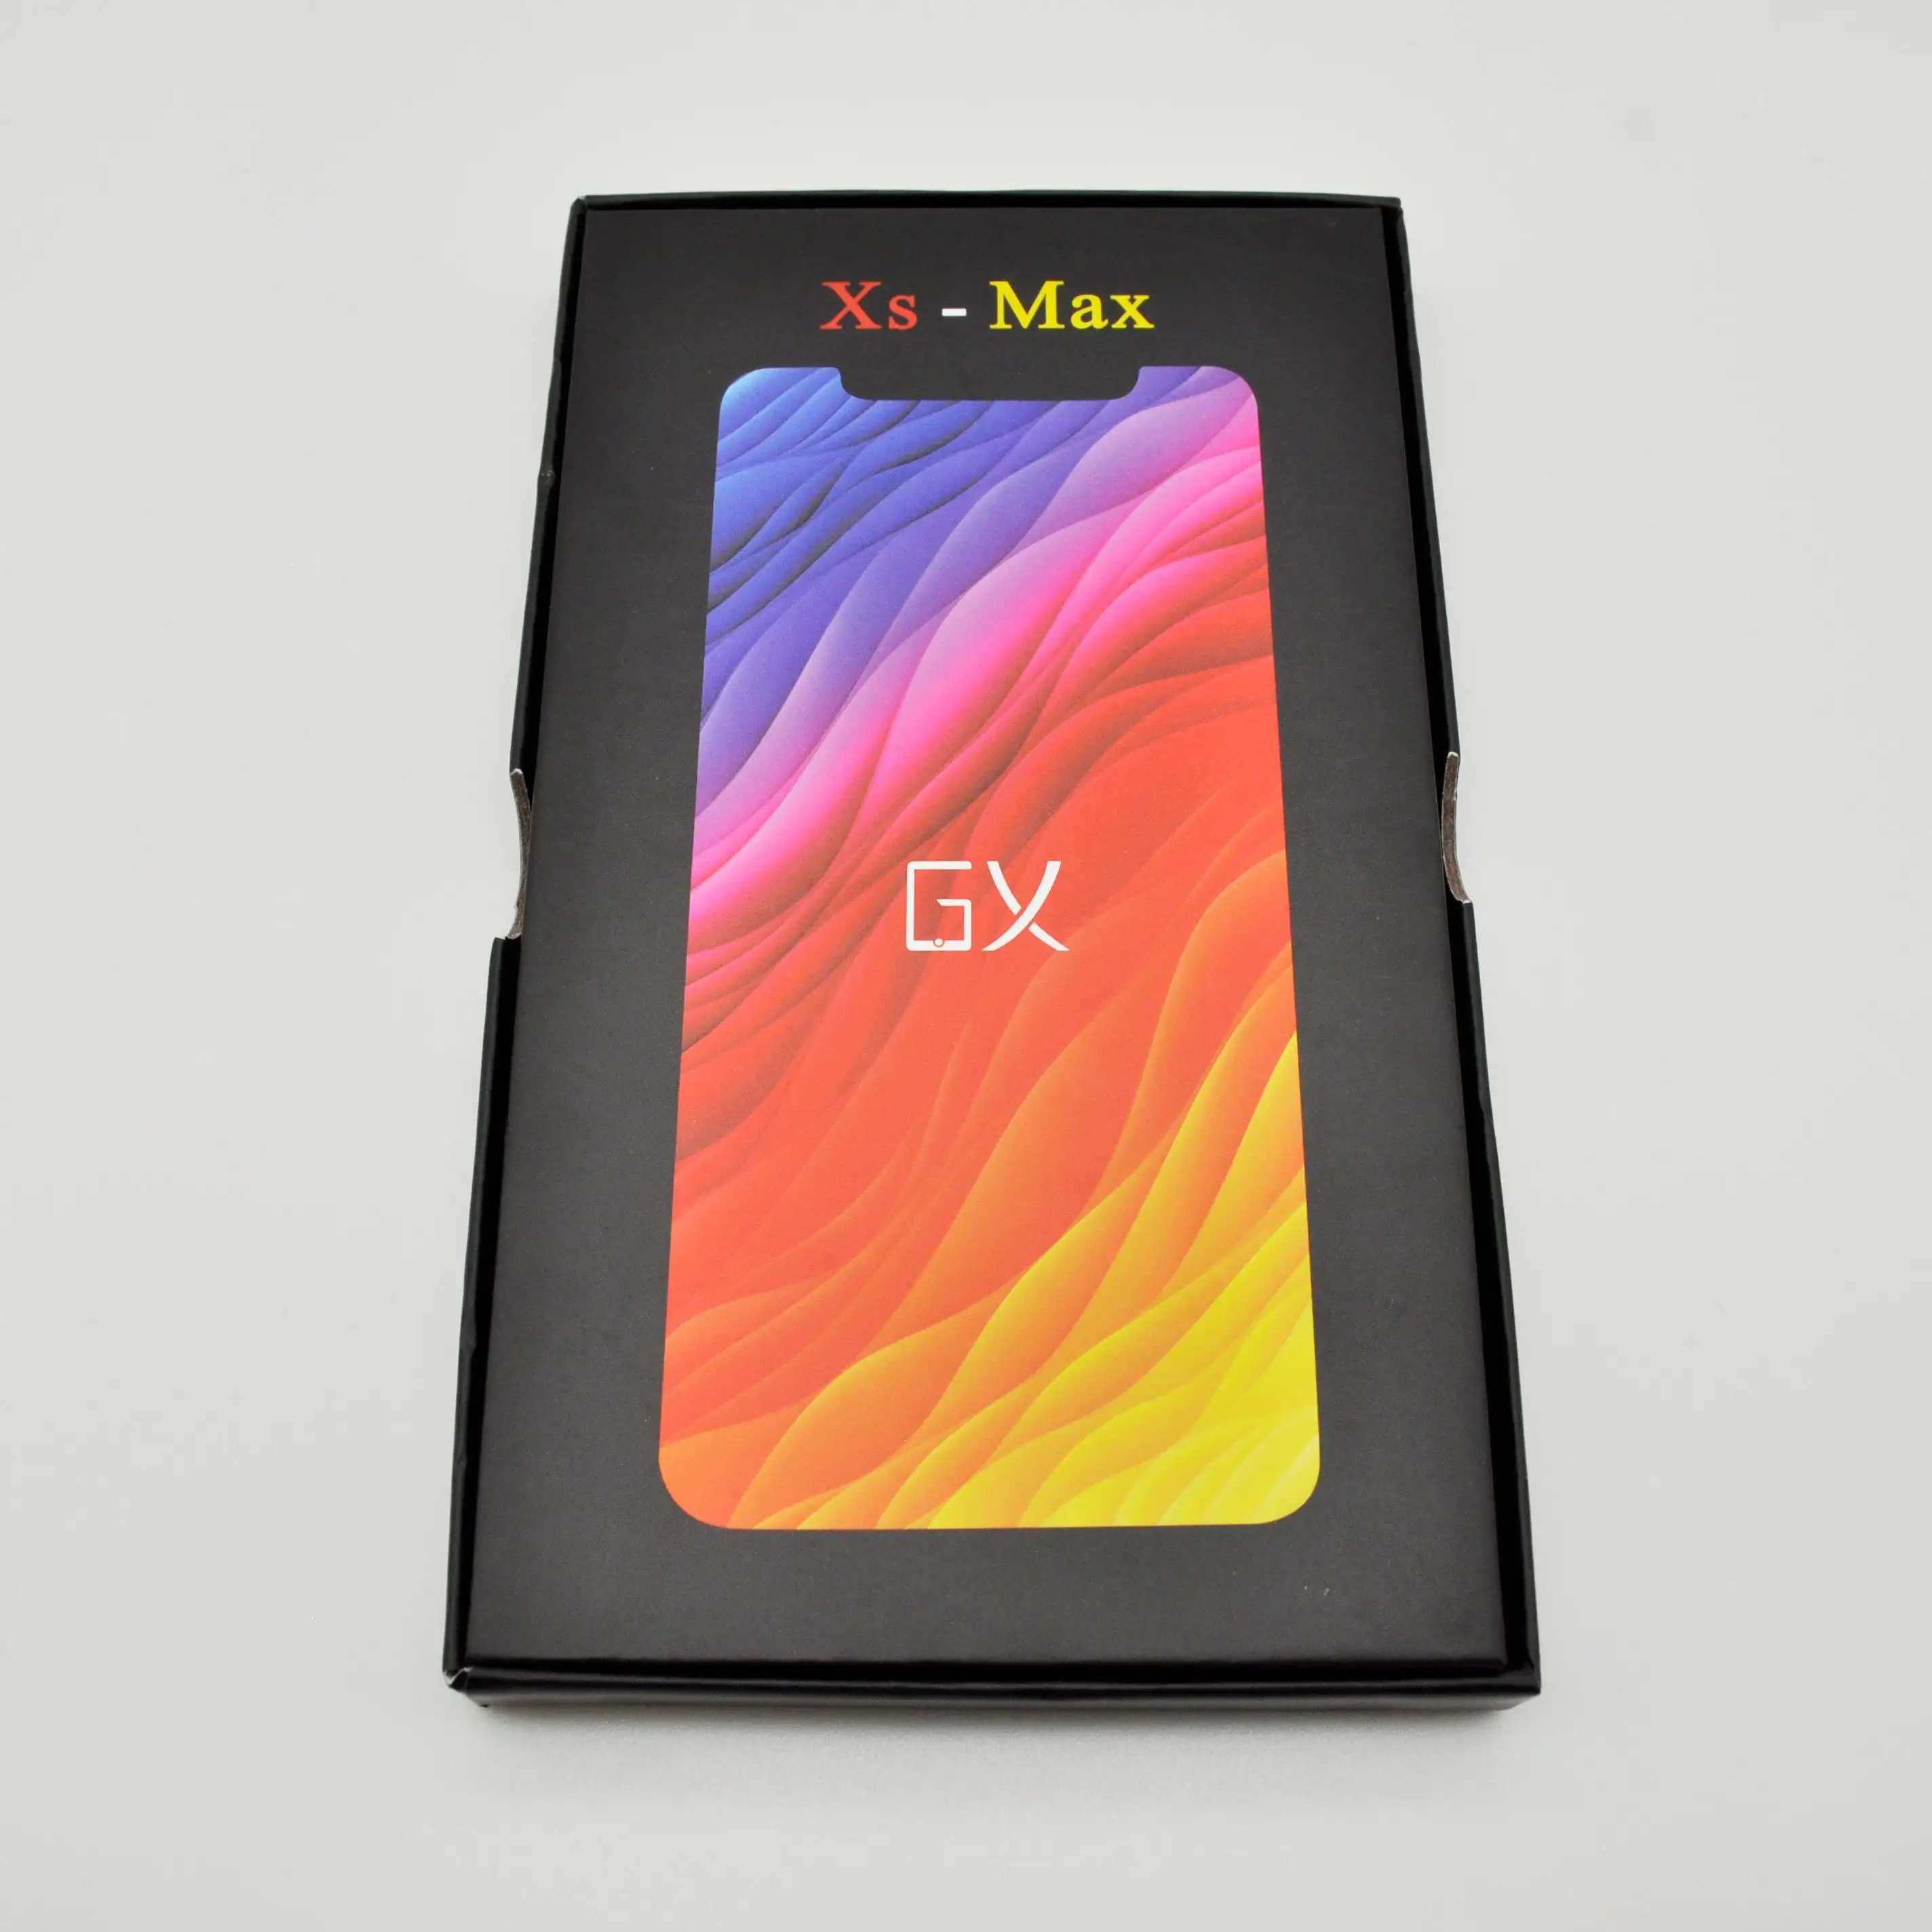 LCD de china para iphone xs/xr/x, pantalla móvil para iphone xs/xs max, precio bajo